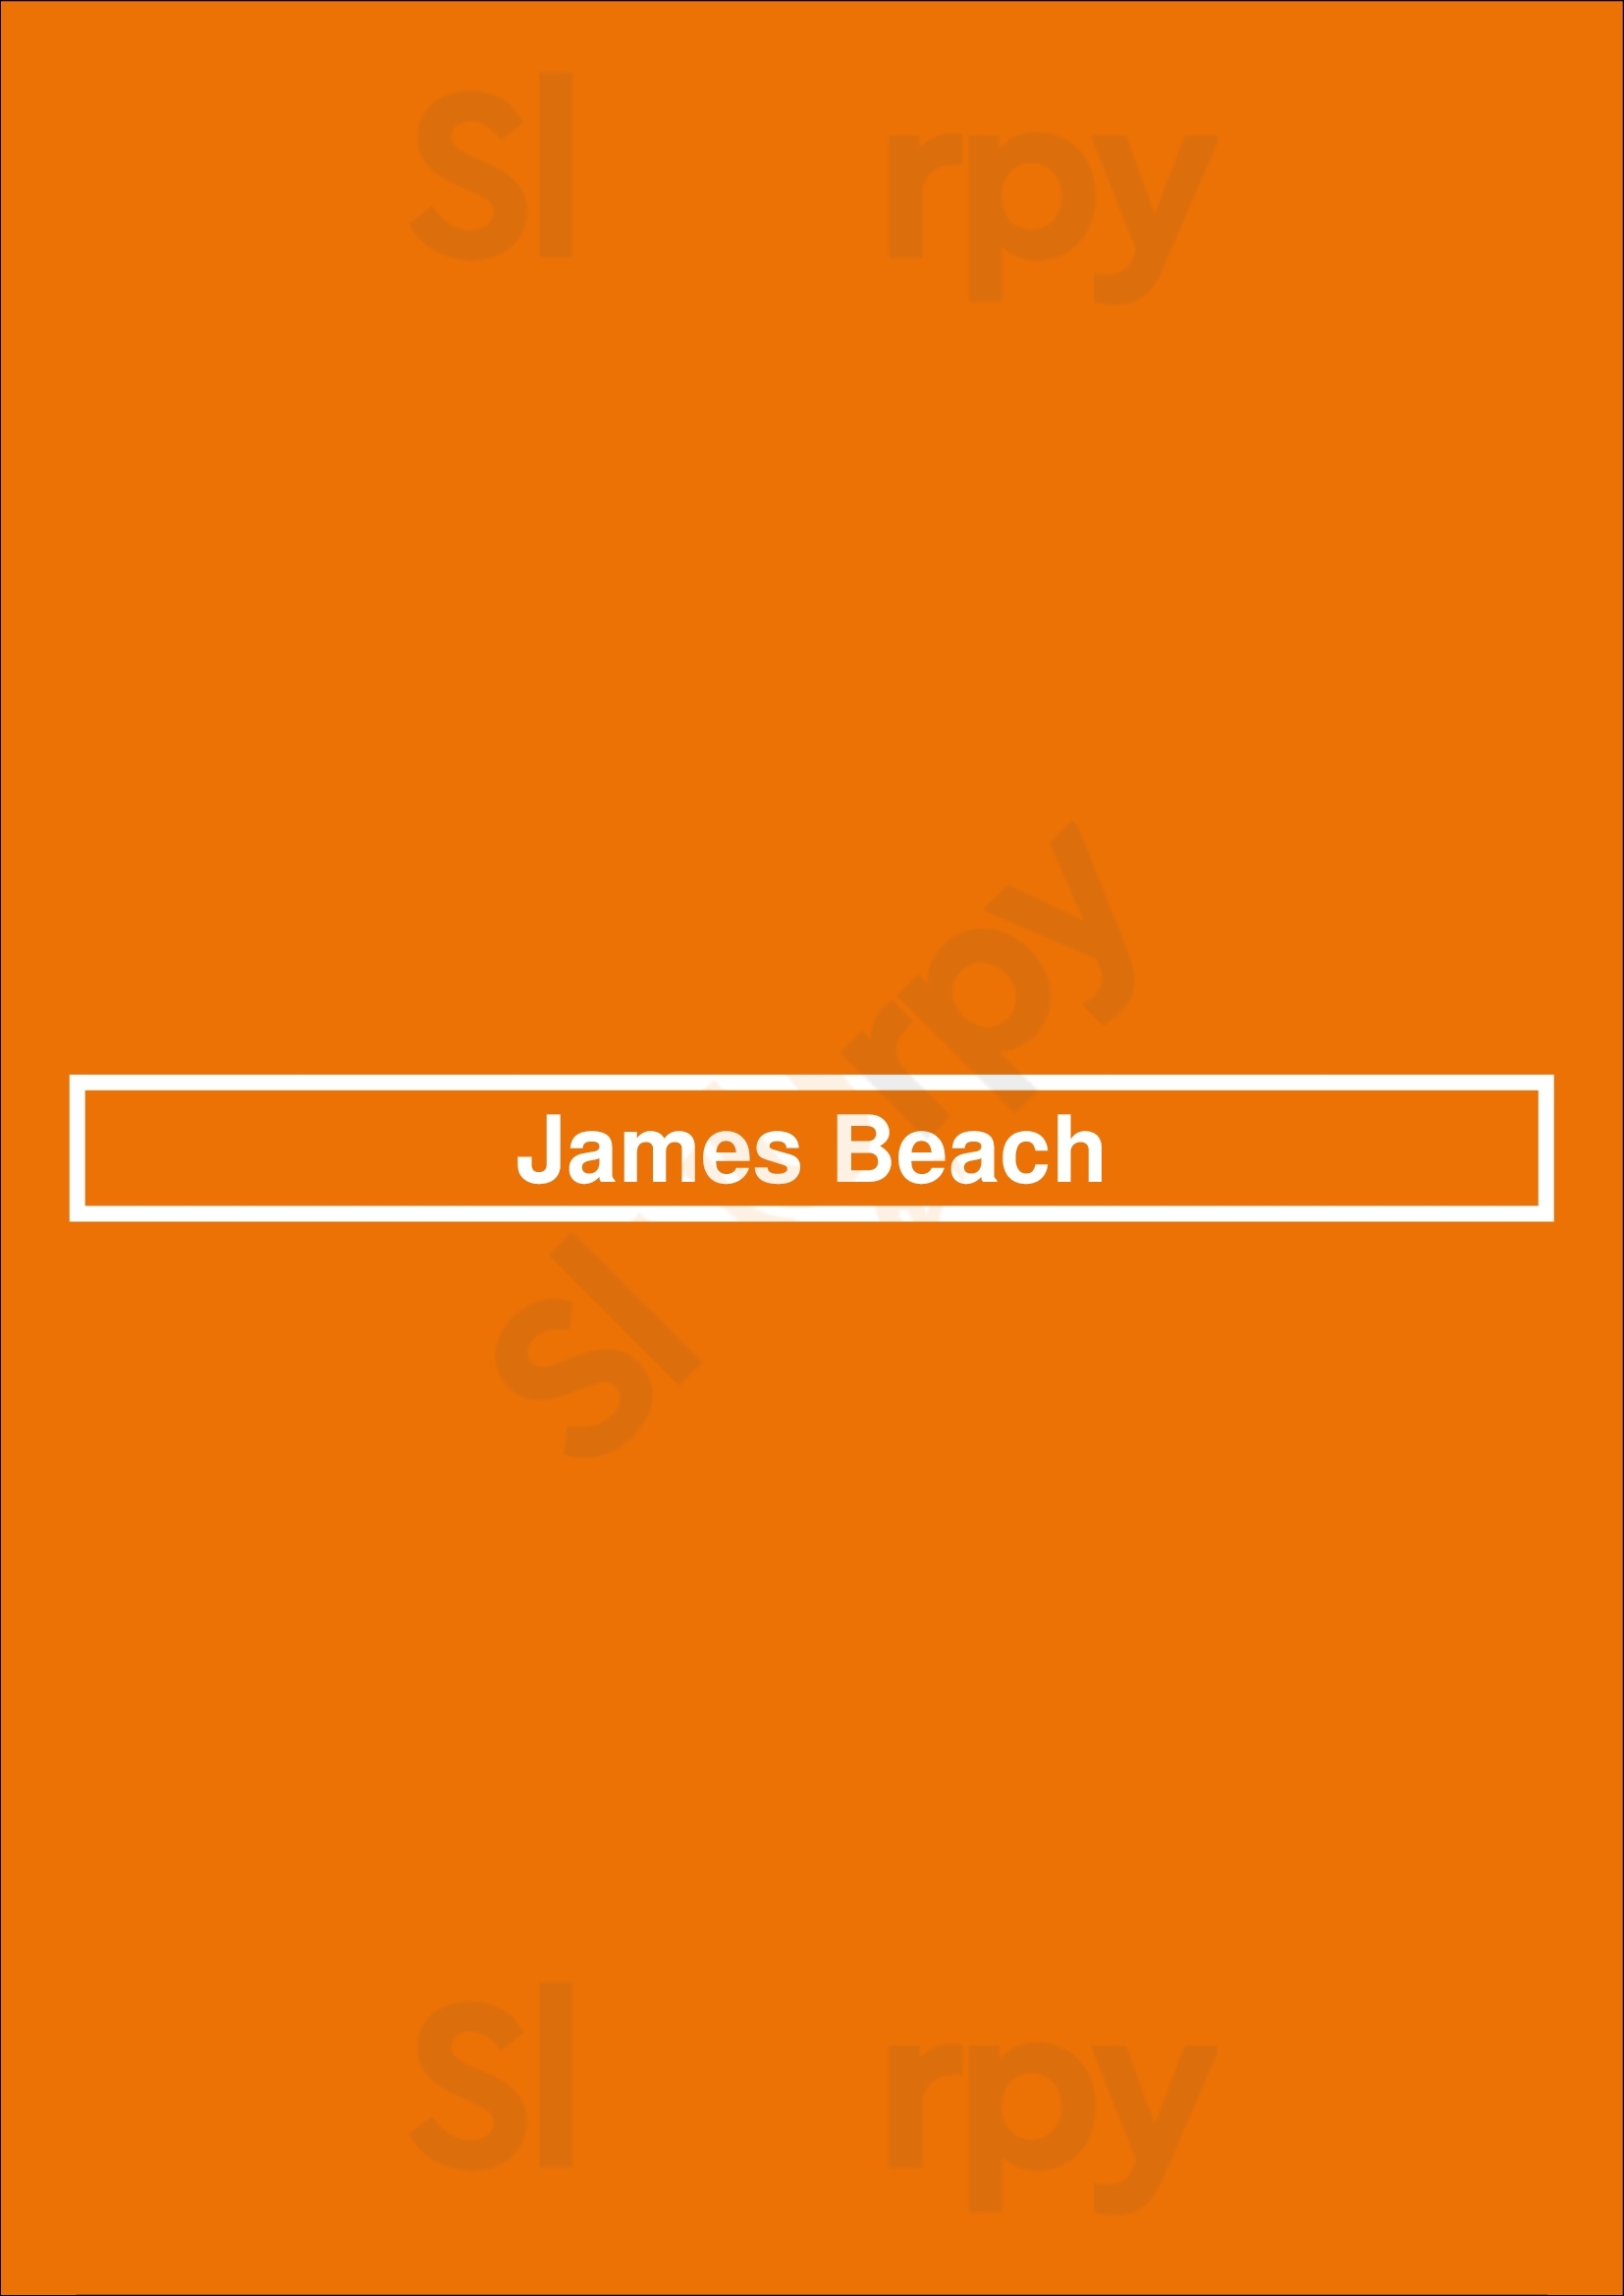 James Beach Los Angeles Menu - 1